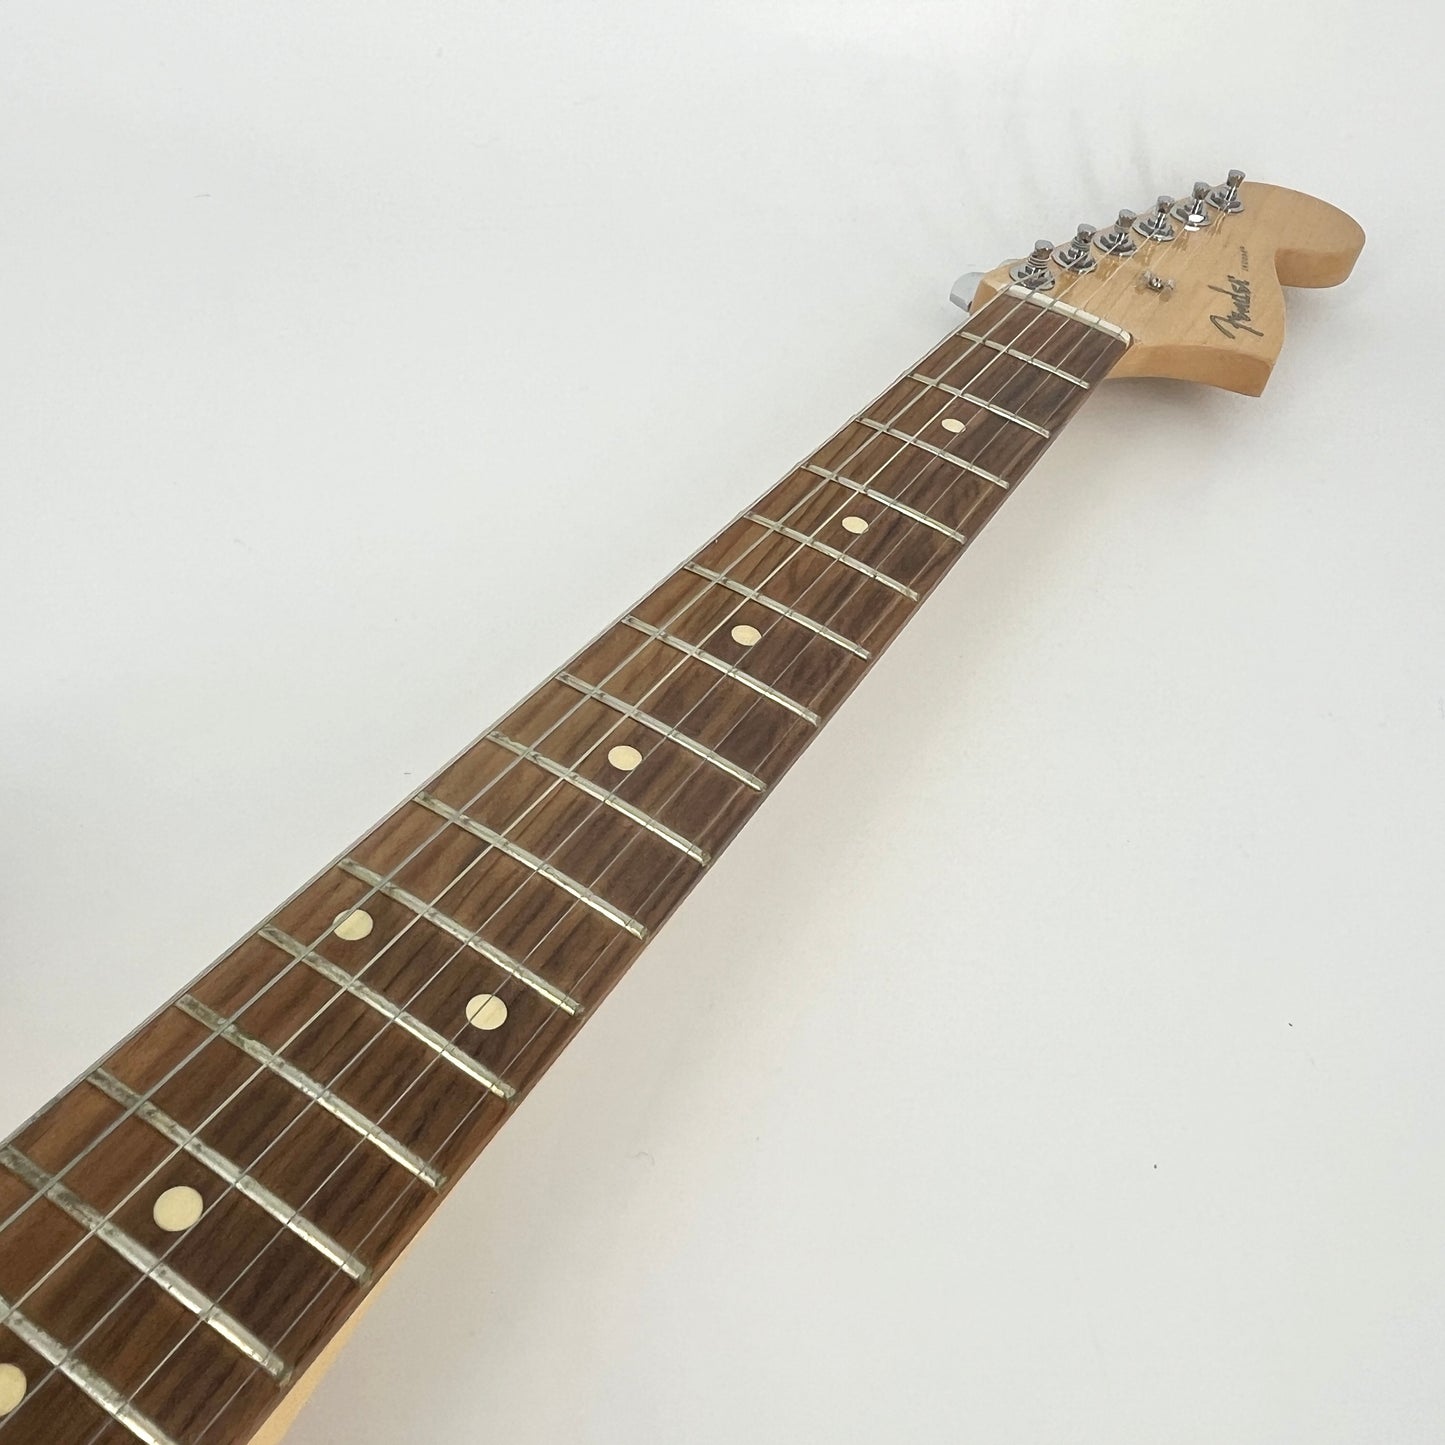 2021 Fender Player Limited Edition Jaguar – Shell Pink